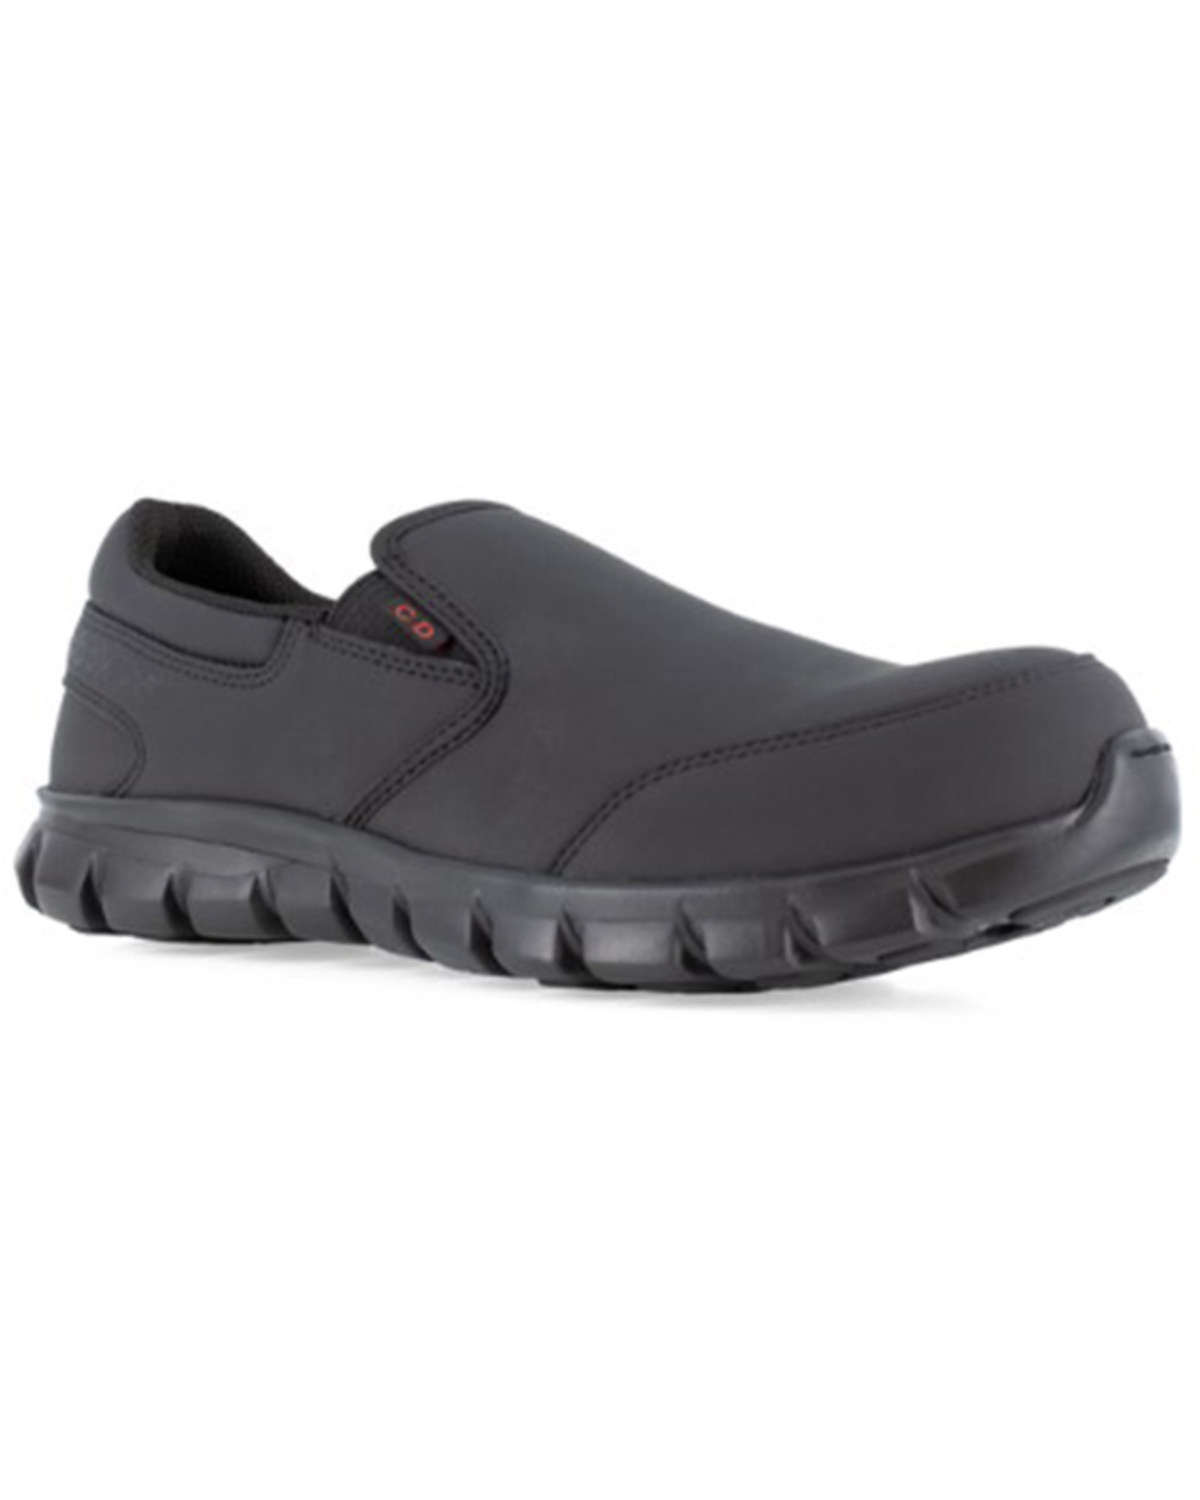 Reebok Women's Sublite Cushion Athletic Slip-On Work Shoes - Composite Toe